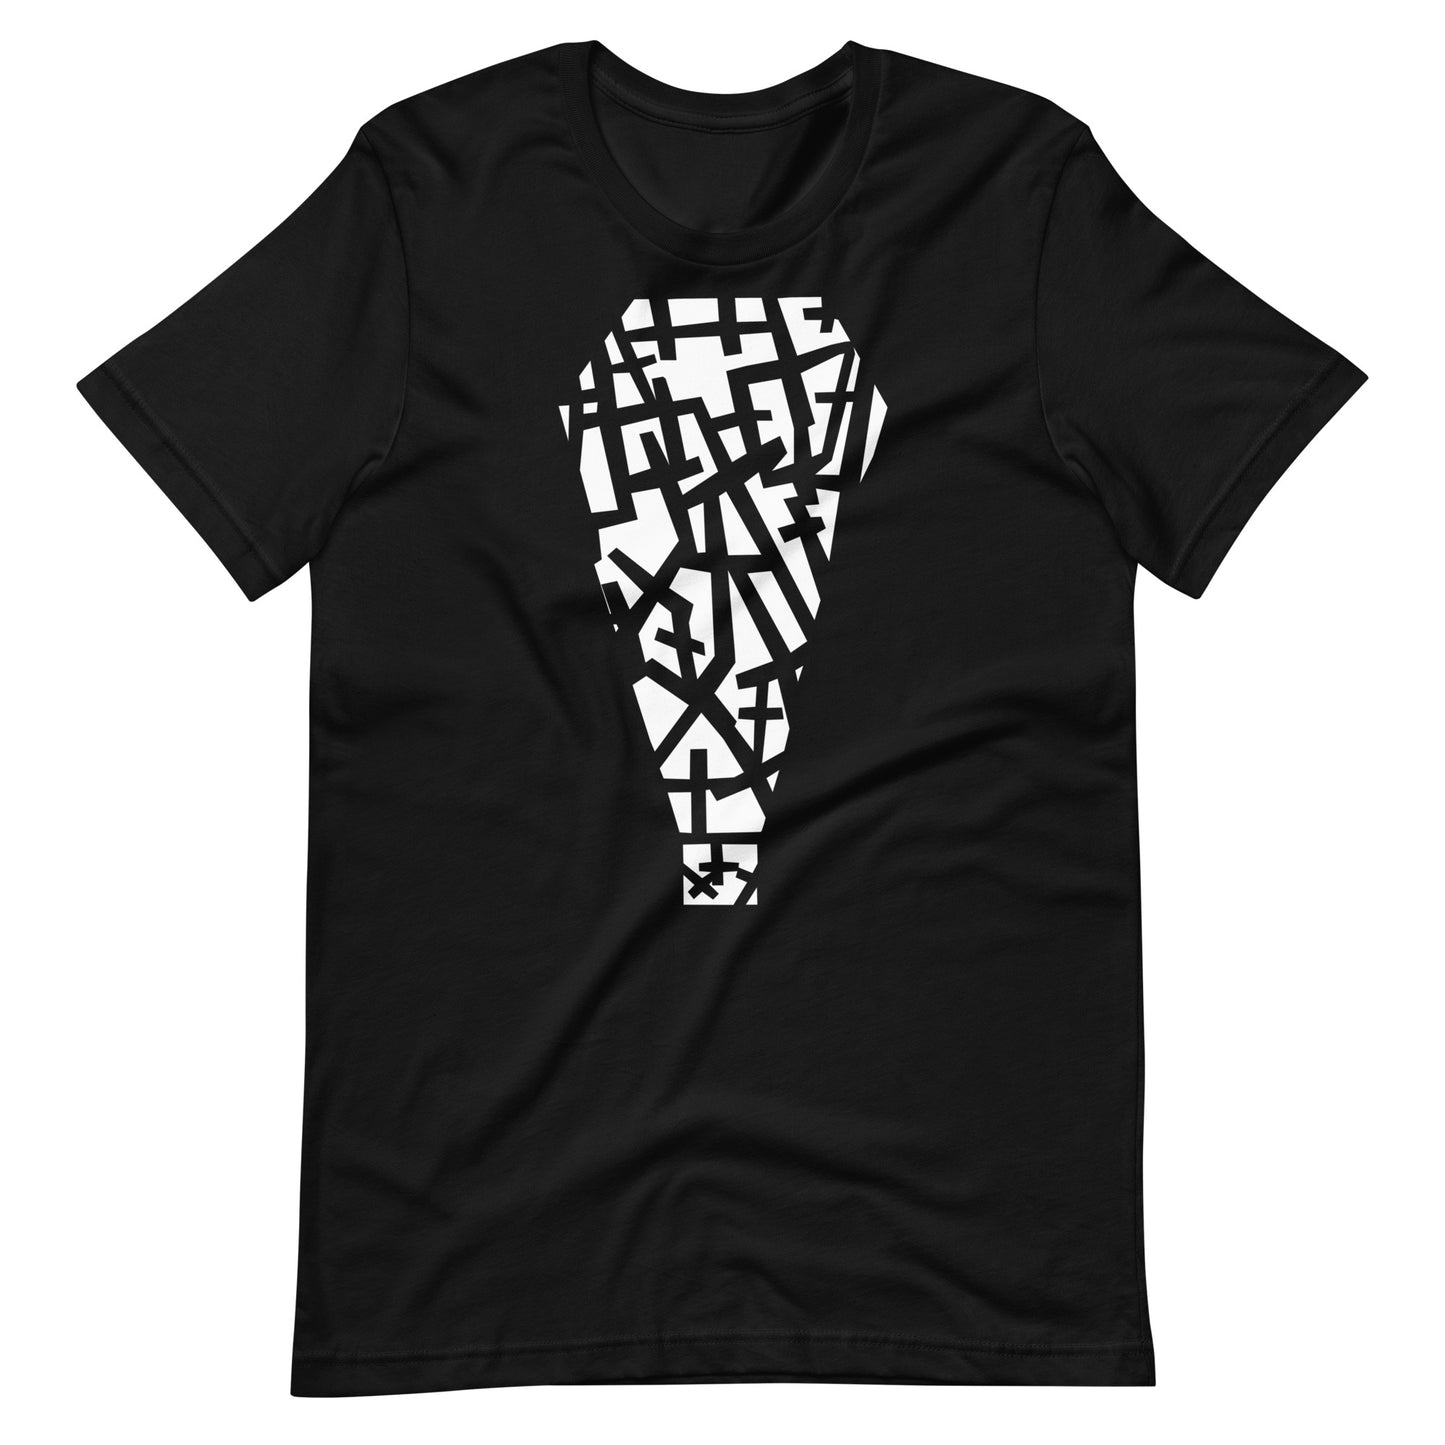 Deadty - Men's t-shirt - Black Front